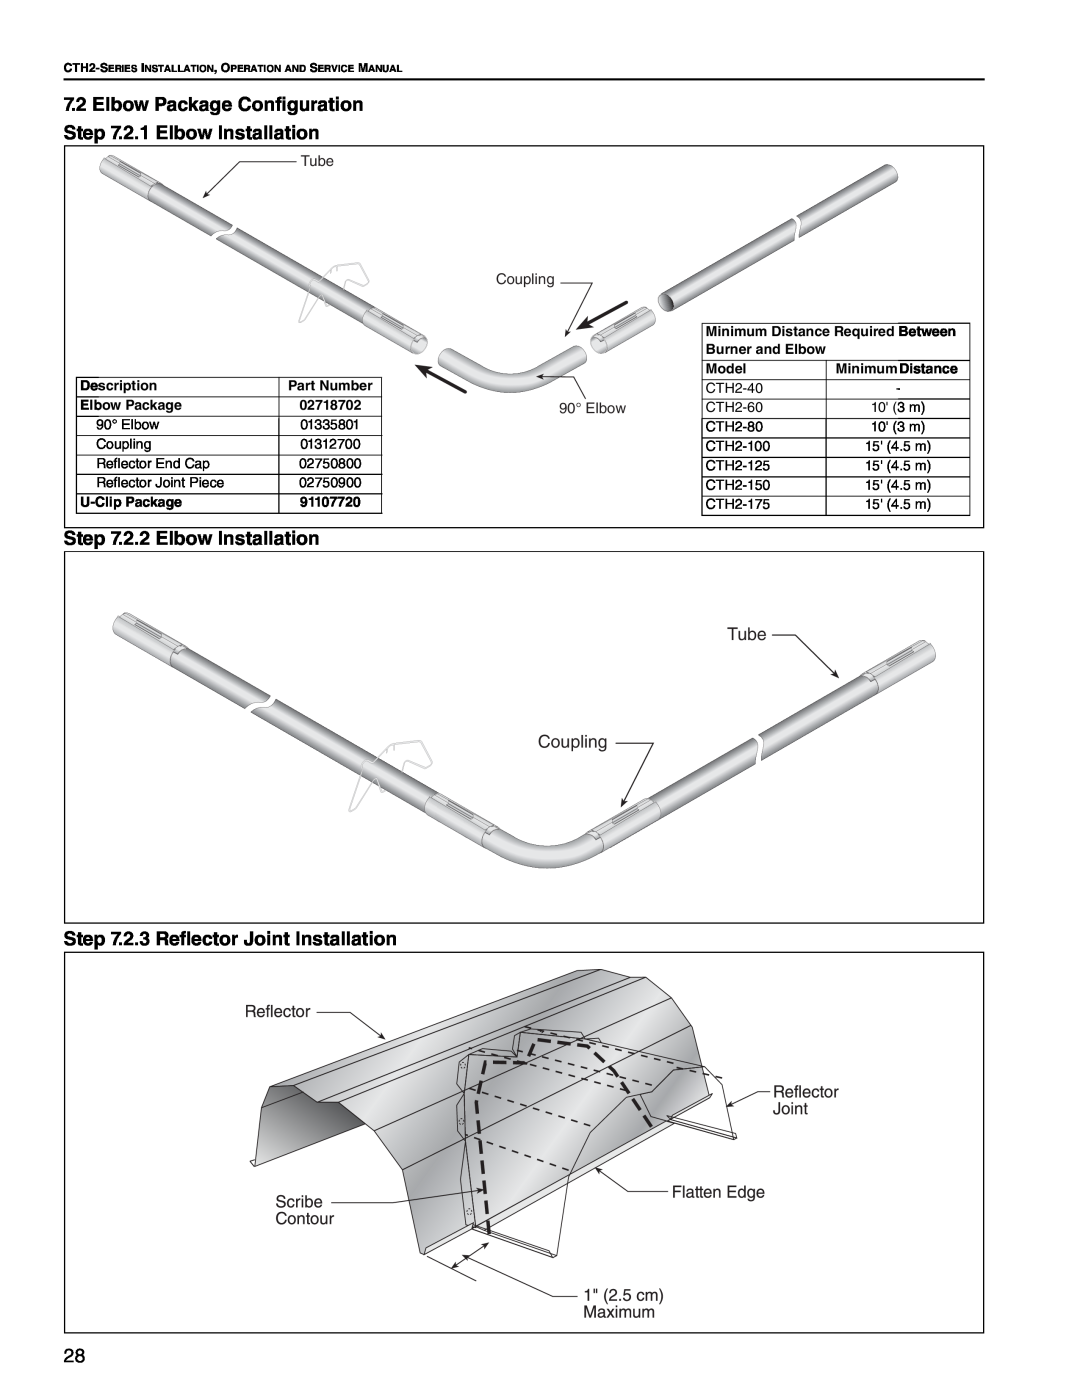 Roberts Gorden CTH2-175 2.2 Elbow Installation, 2.3 Reflector Joint Installation, Burner and Elbow, Model, Description 